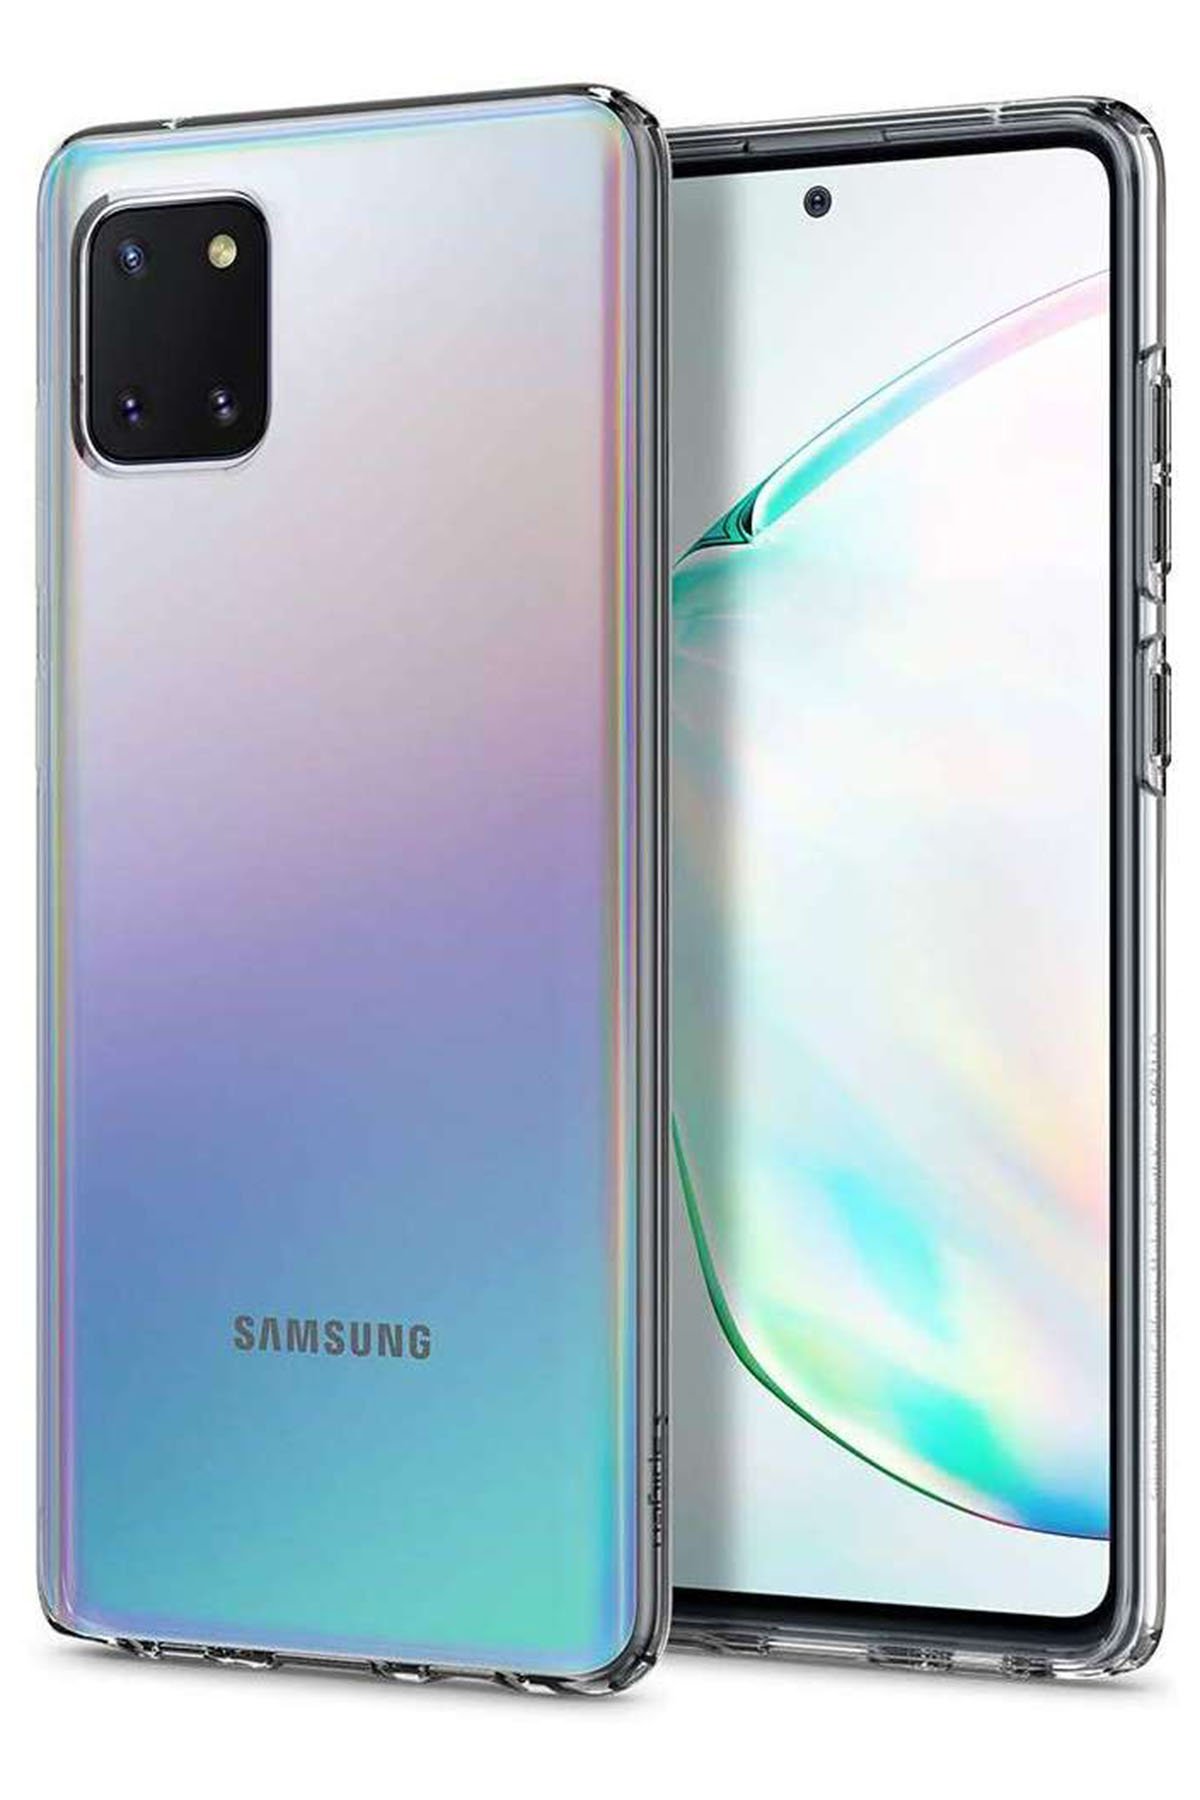 Newface Samsung Galaxy A81 / Note 10 Lite Kılıf Palm Buzlu Kamera Sürgülü Silikon - Turkuaz